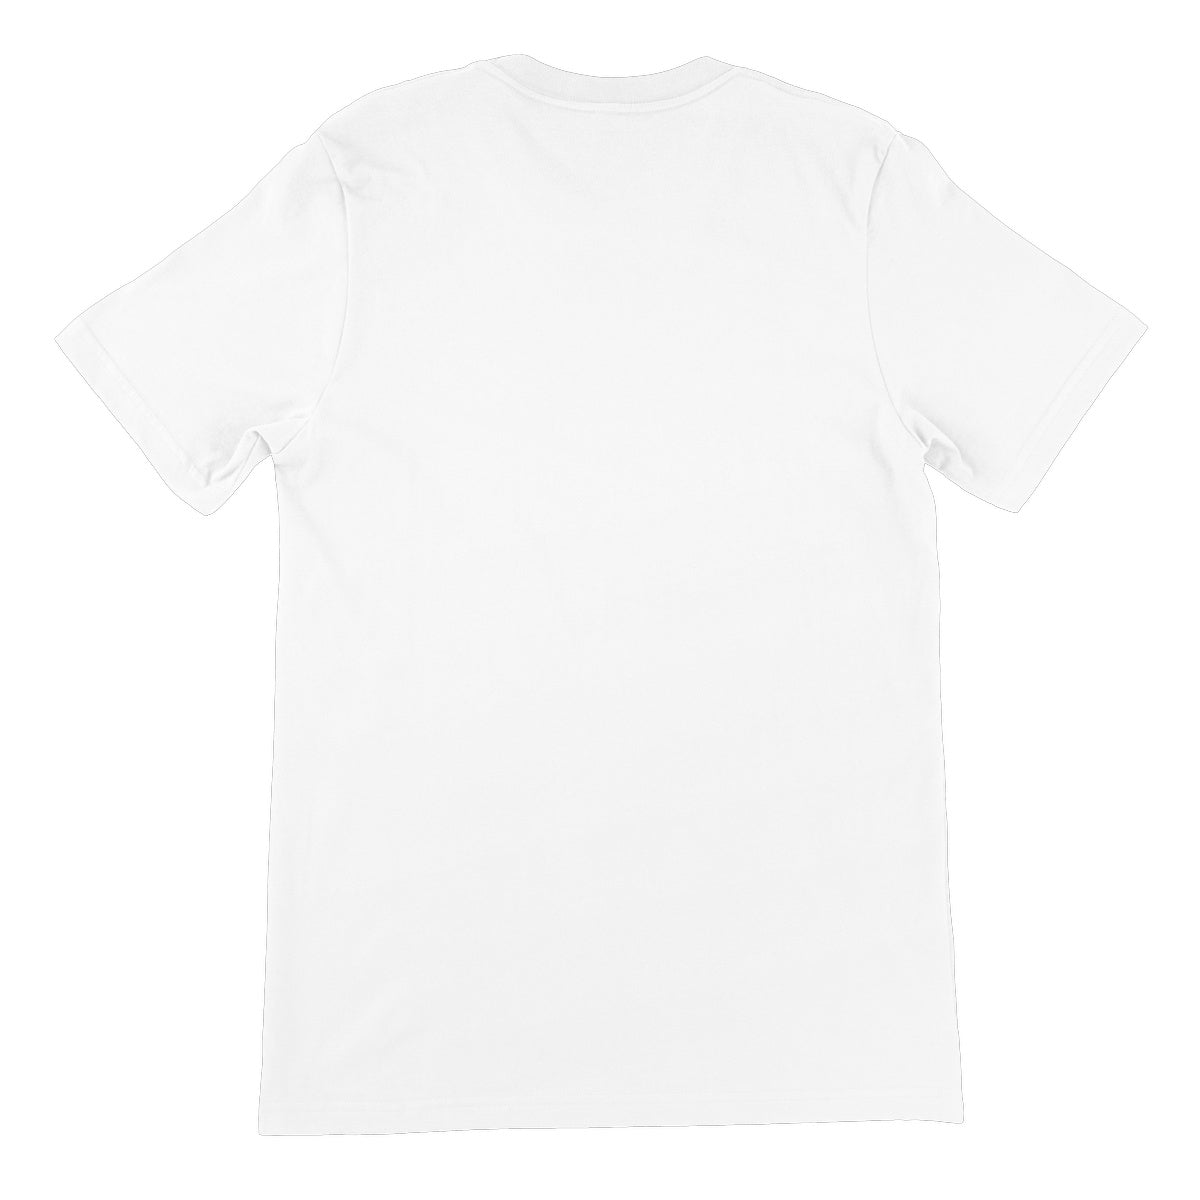 Cast away Illustrated Unisex Short Sleeve T-Shirt